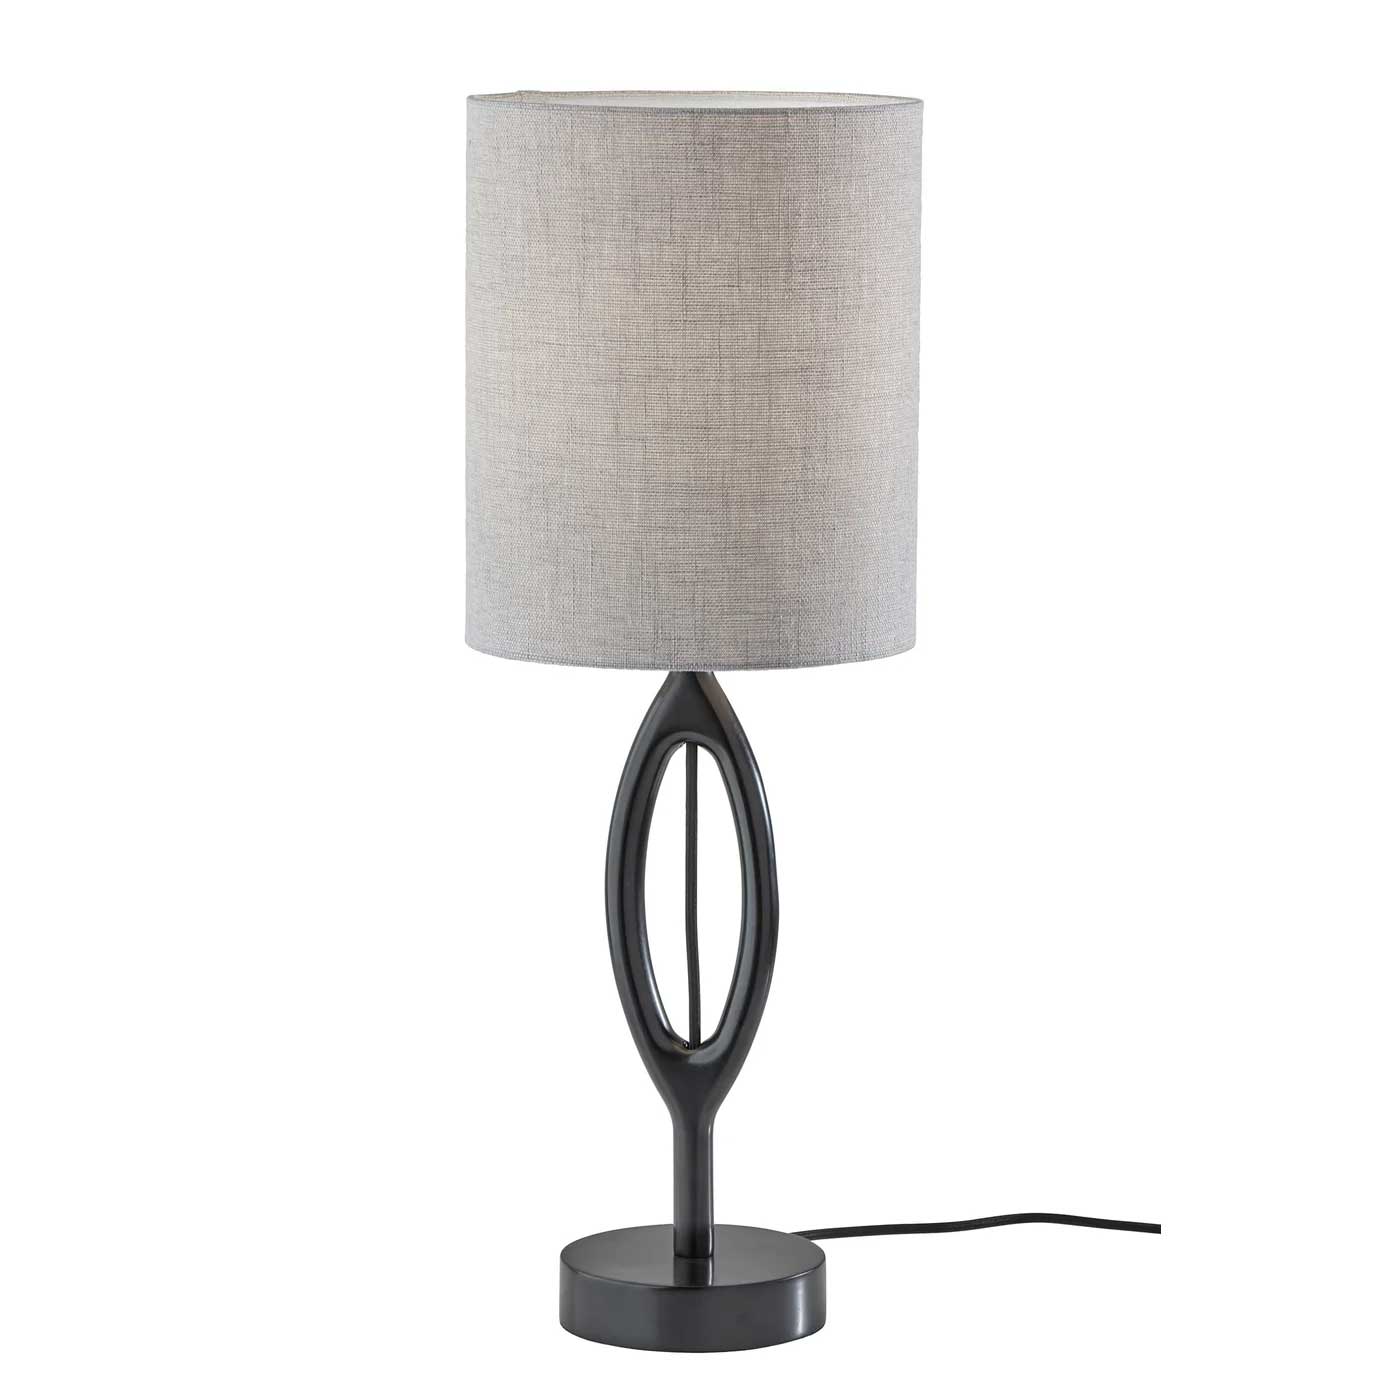 MAYFAIR Table lamp Wood, Black - 1627-01 | ADESSO